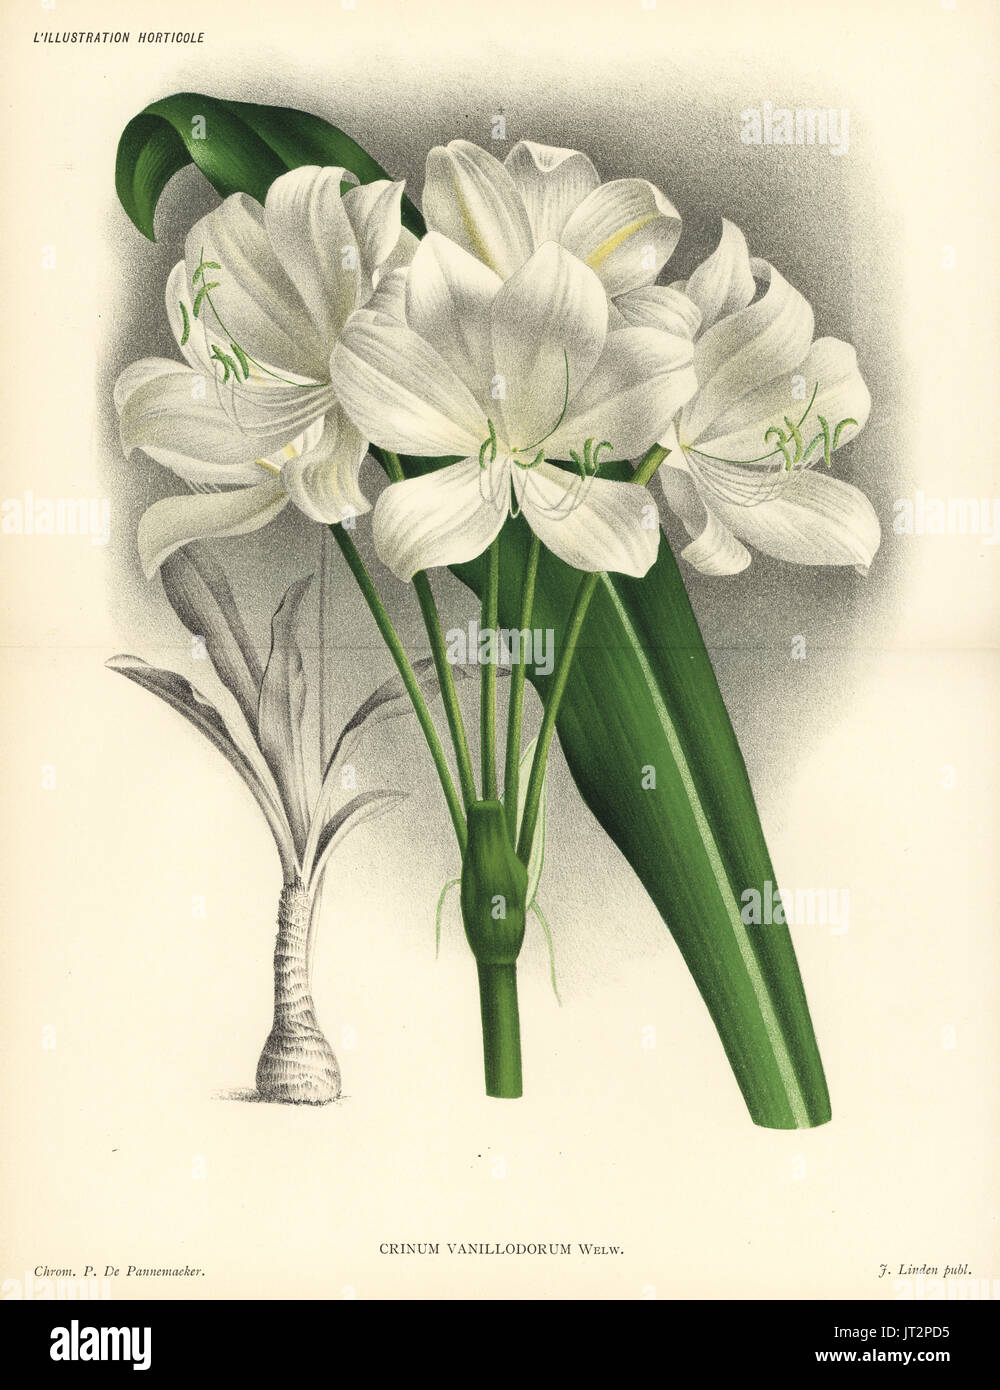 St. Christopher lily, Crinum jagus (Crinum vanillodorum). Chromolithograph by Pieter de Pannemaeker from Jean Linden's l'Illustration Horticole, Brussels, 1885. Stock Photo